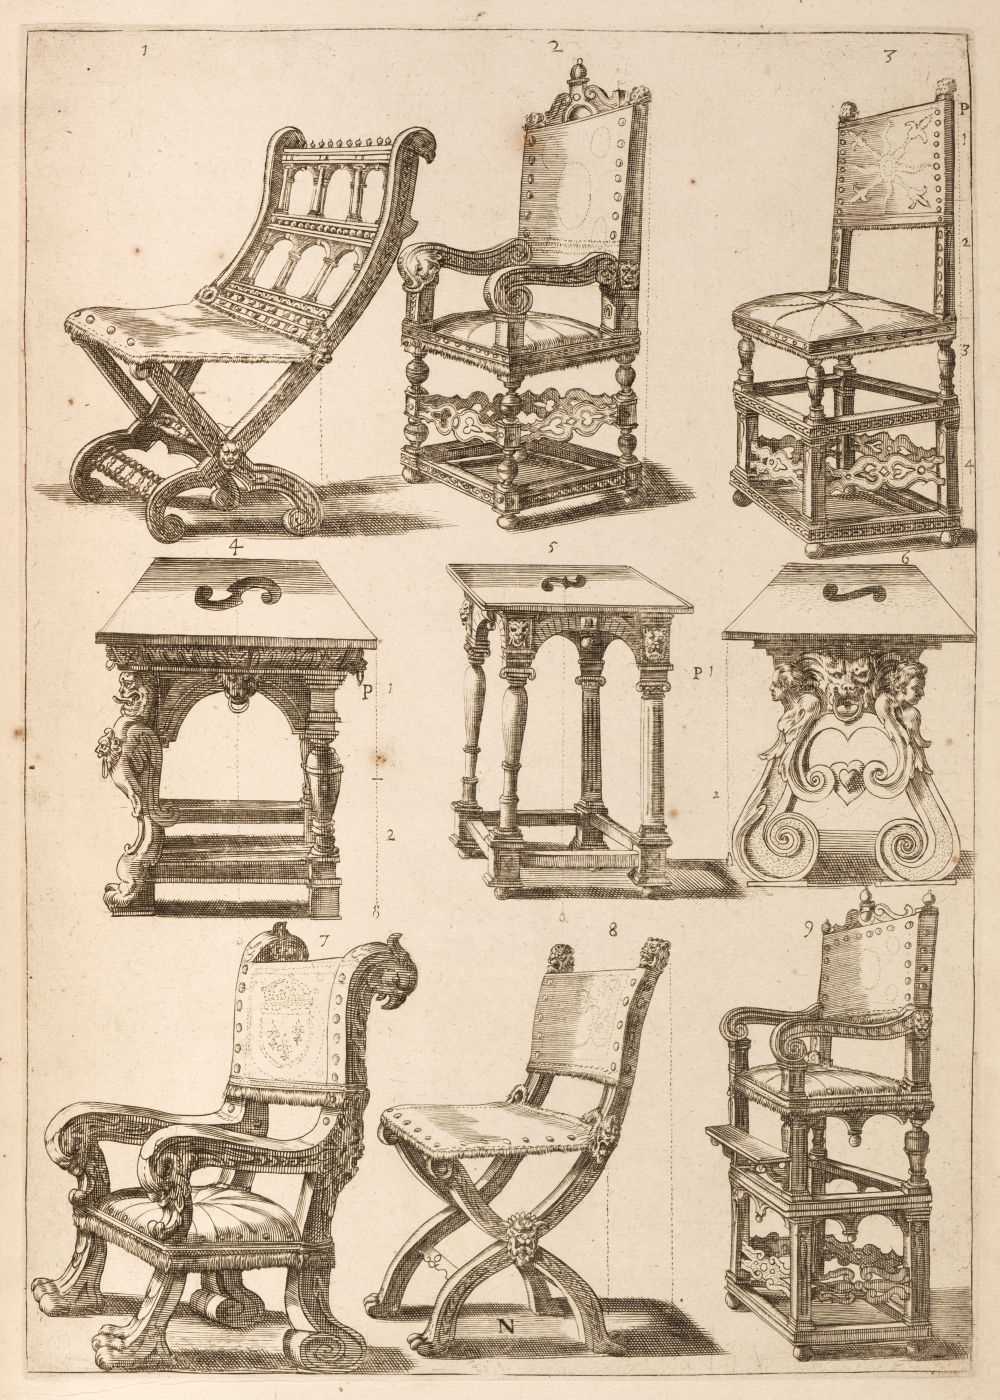 Lot 302 - Vignola (Jacopo Barozzi da). Regola de cinque ordini d'architettura, 3 parts in 1 volume, 1642